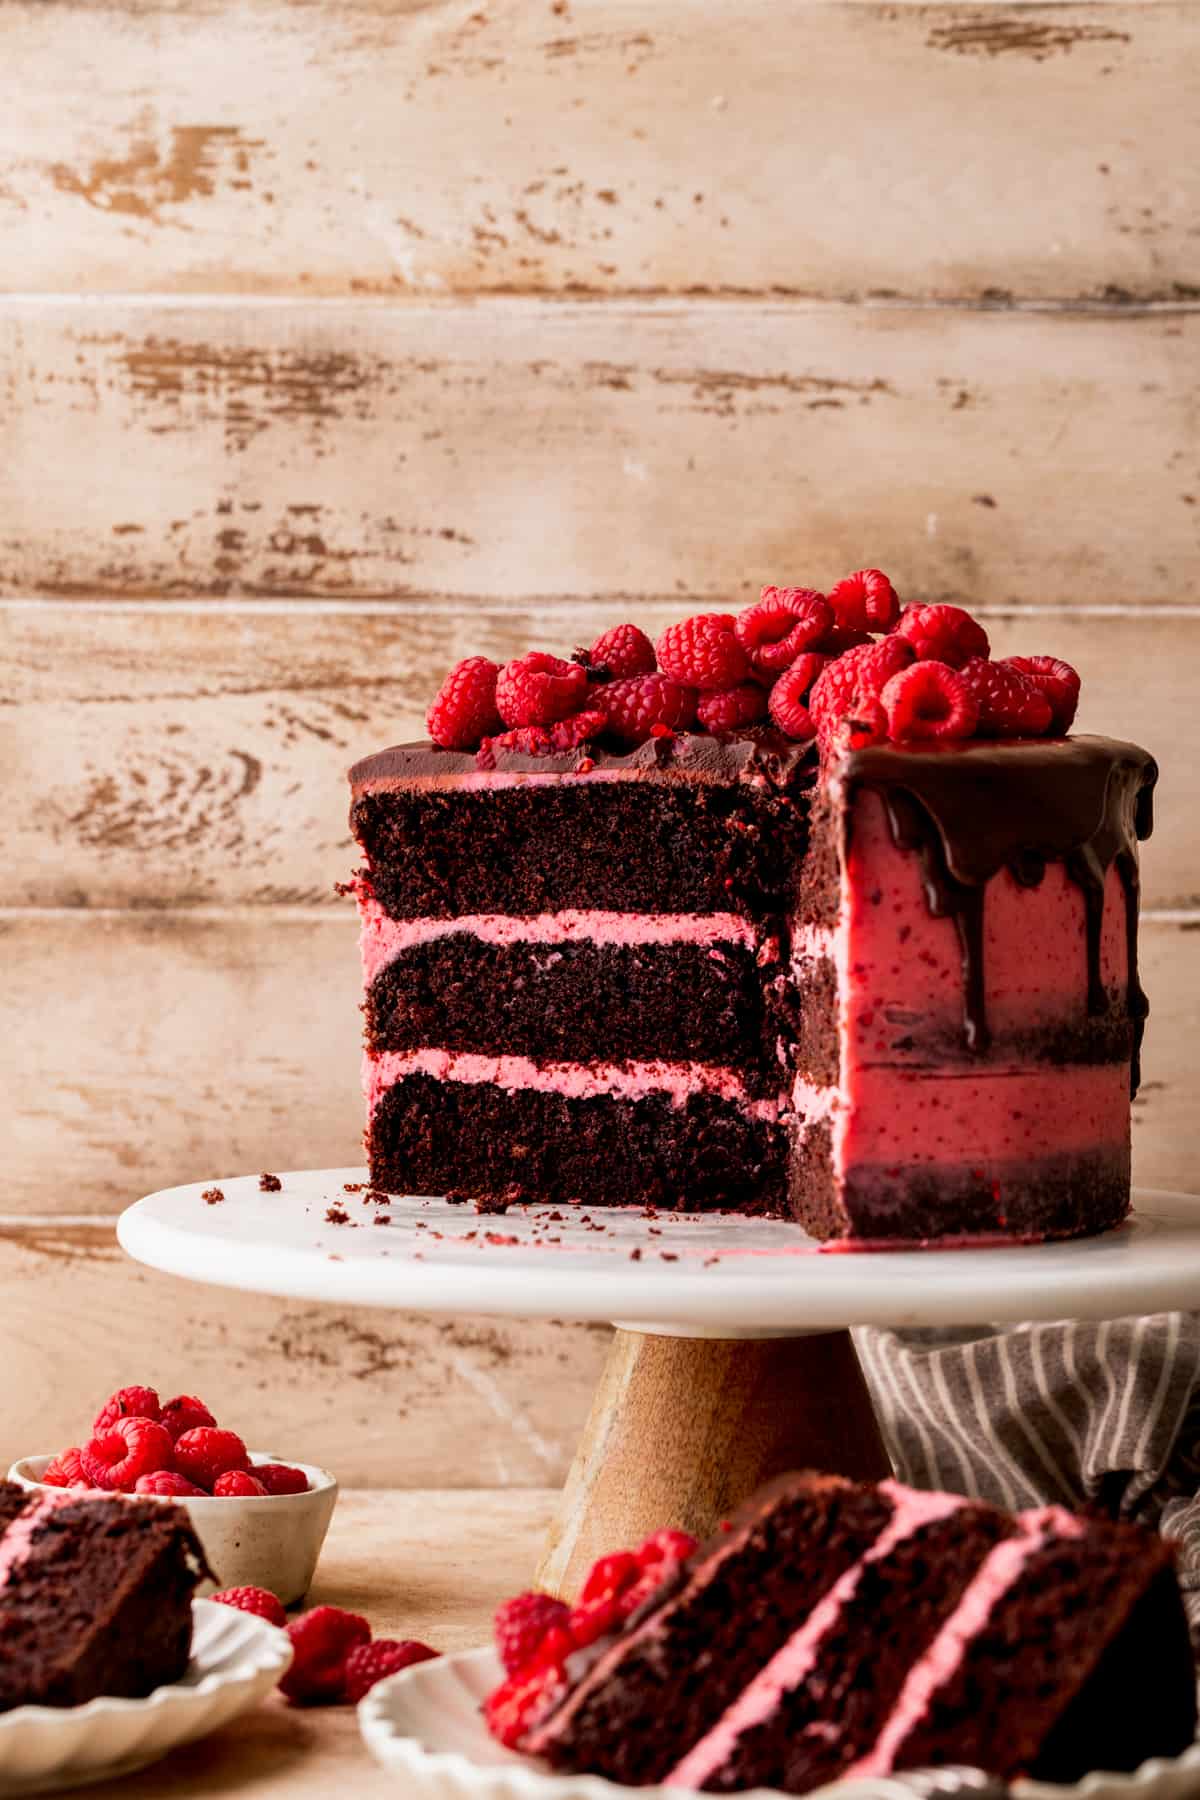 Chocolate raspberry cake cut in half.